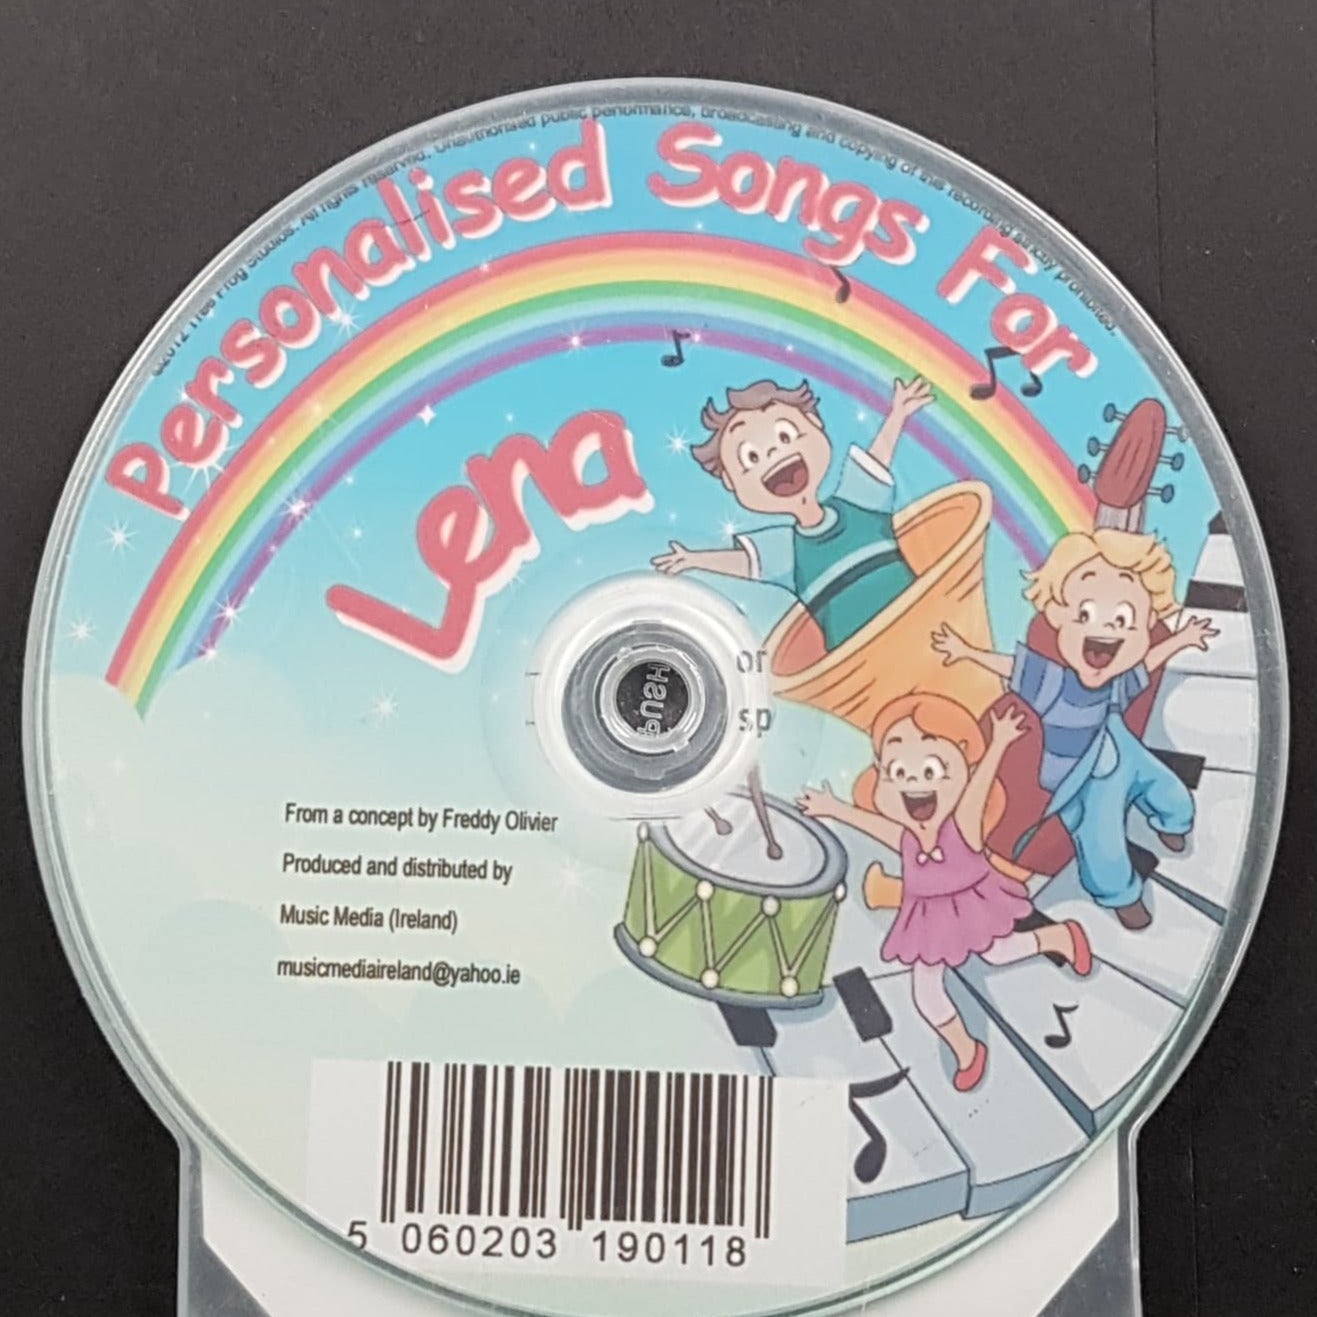 CD - Personalised Children's Songs / Lena